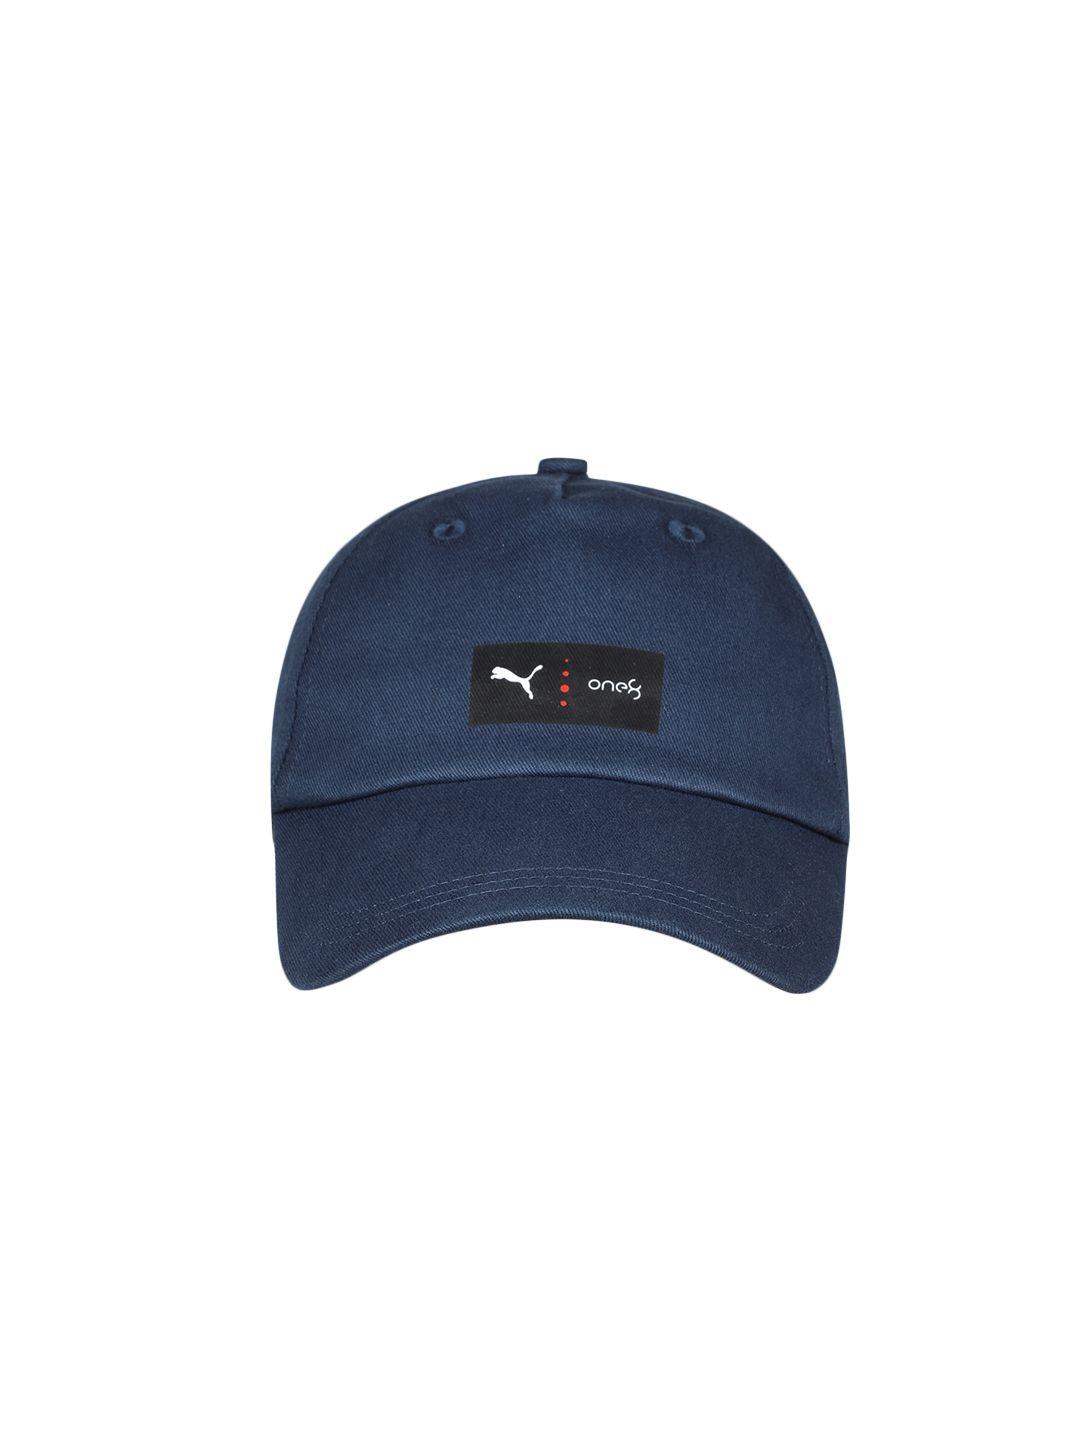 one8 x puma unisex brand logo print classic pure cotton baseball cap